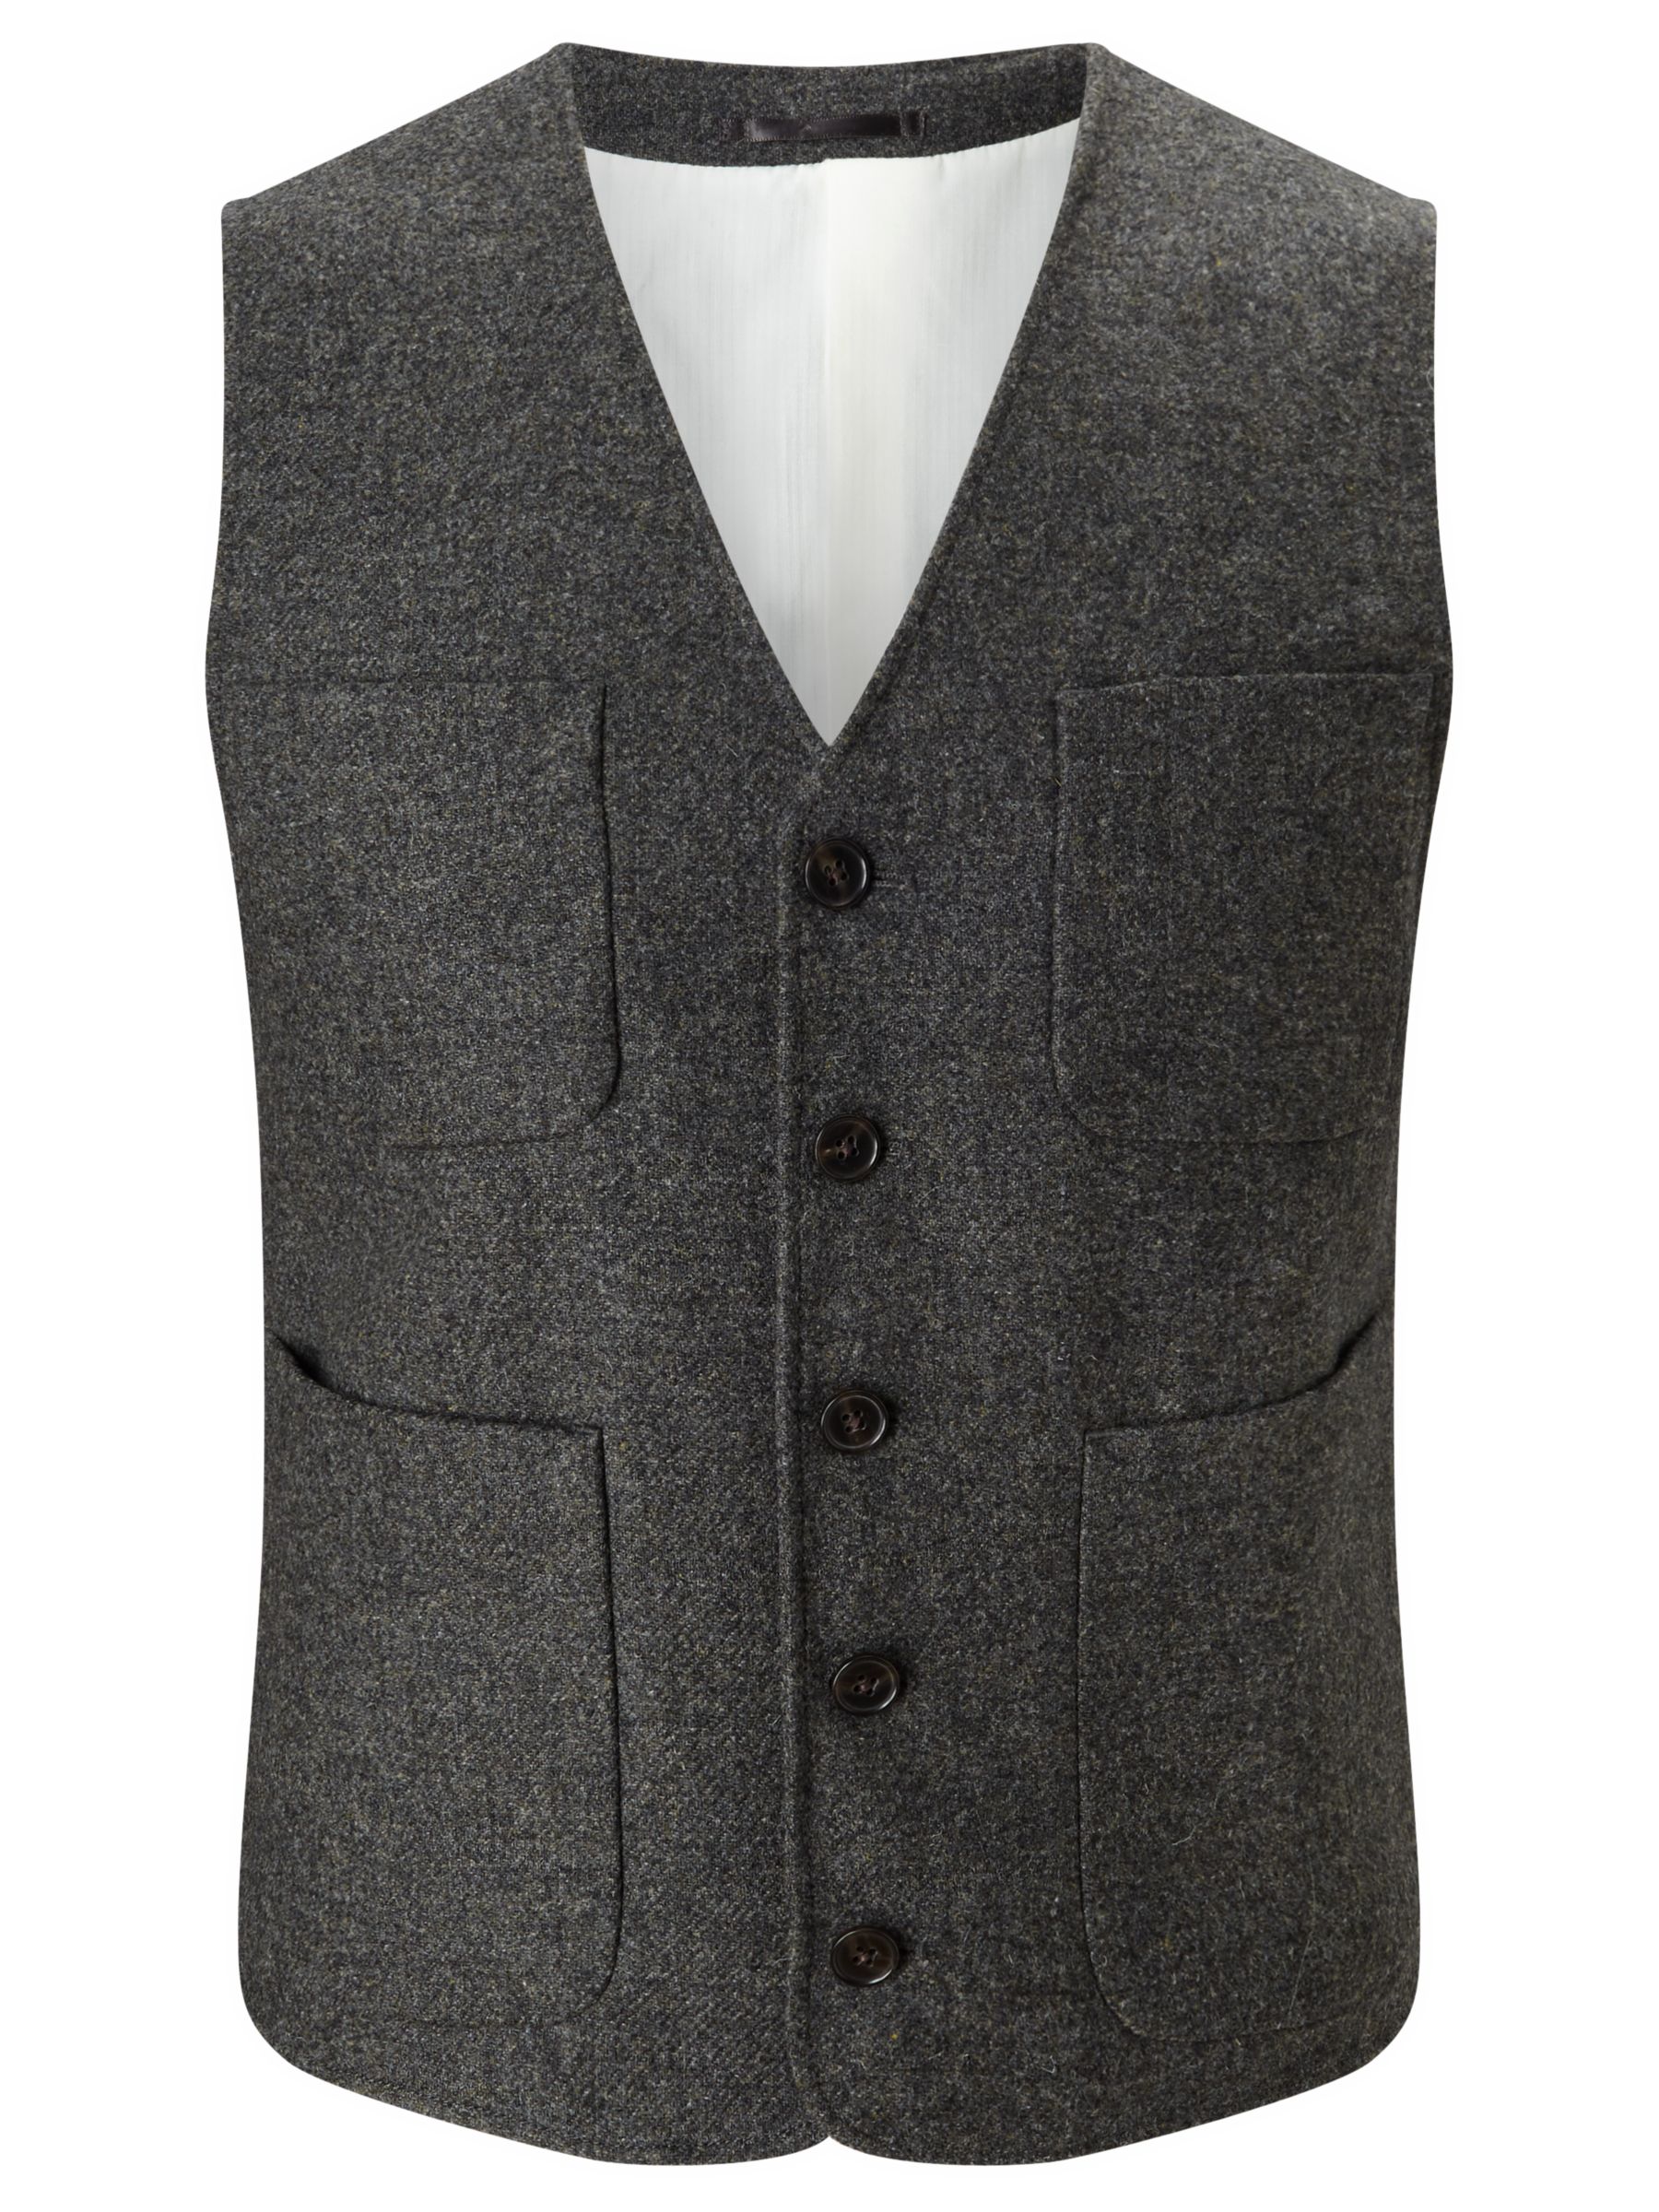 JOHN LEWIS & Co. Collarless Waistcoat, Charcoal, XL